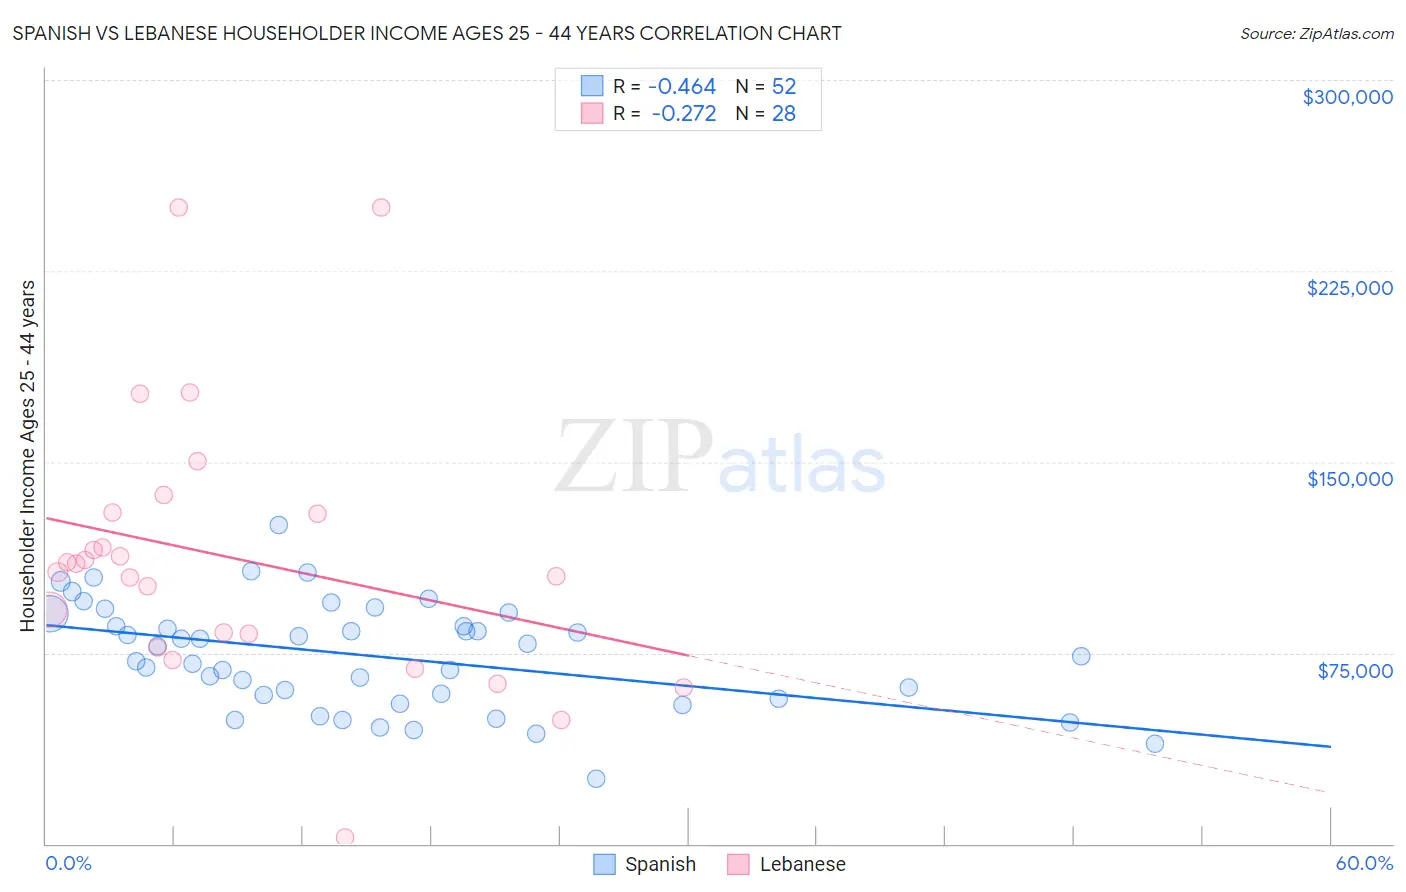 Spanish vs Lebanese Householder Income Ages 25 - 44 years